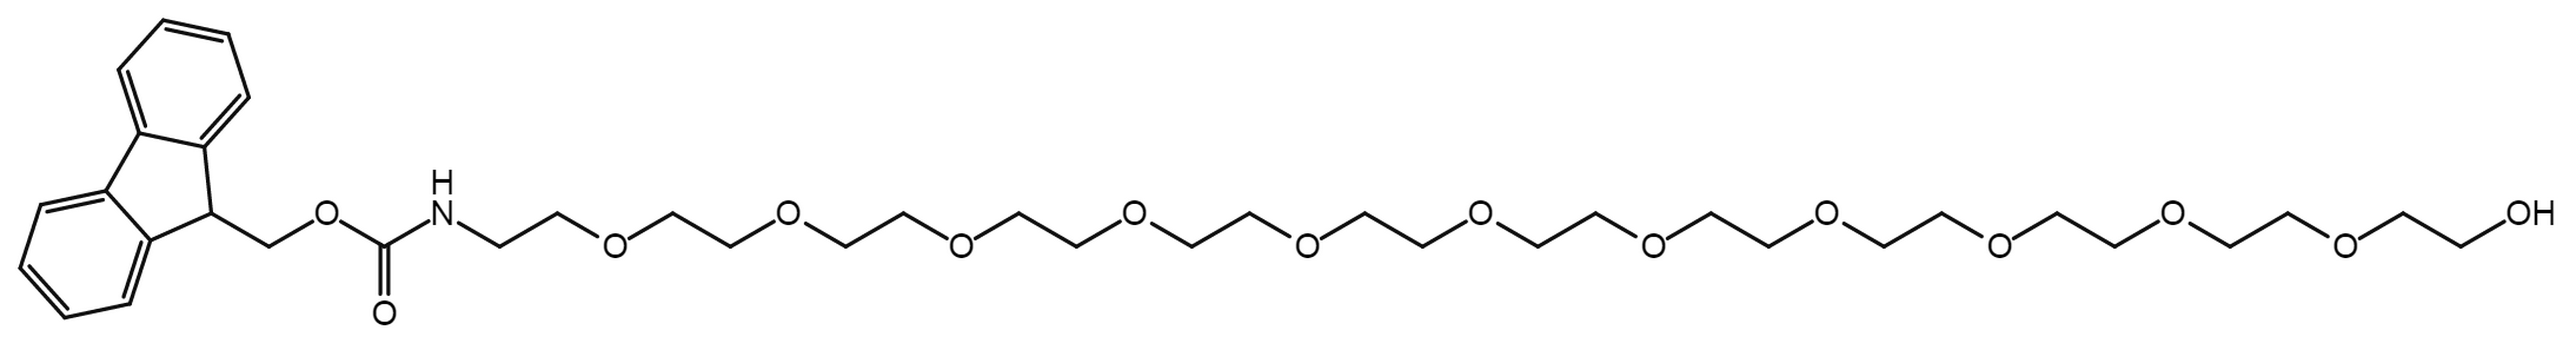 Fmoc-PEG12-alcohol